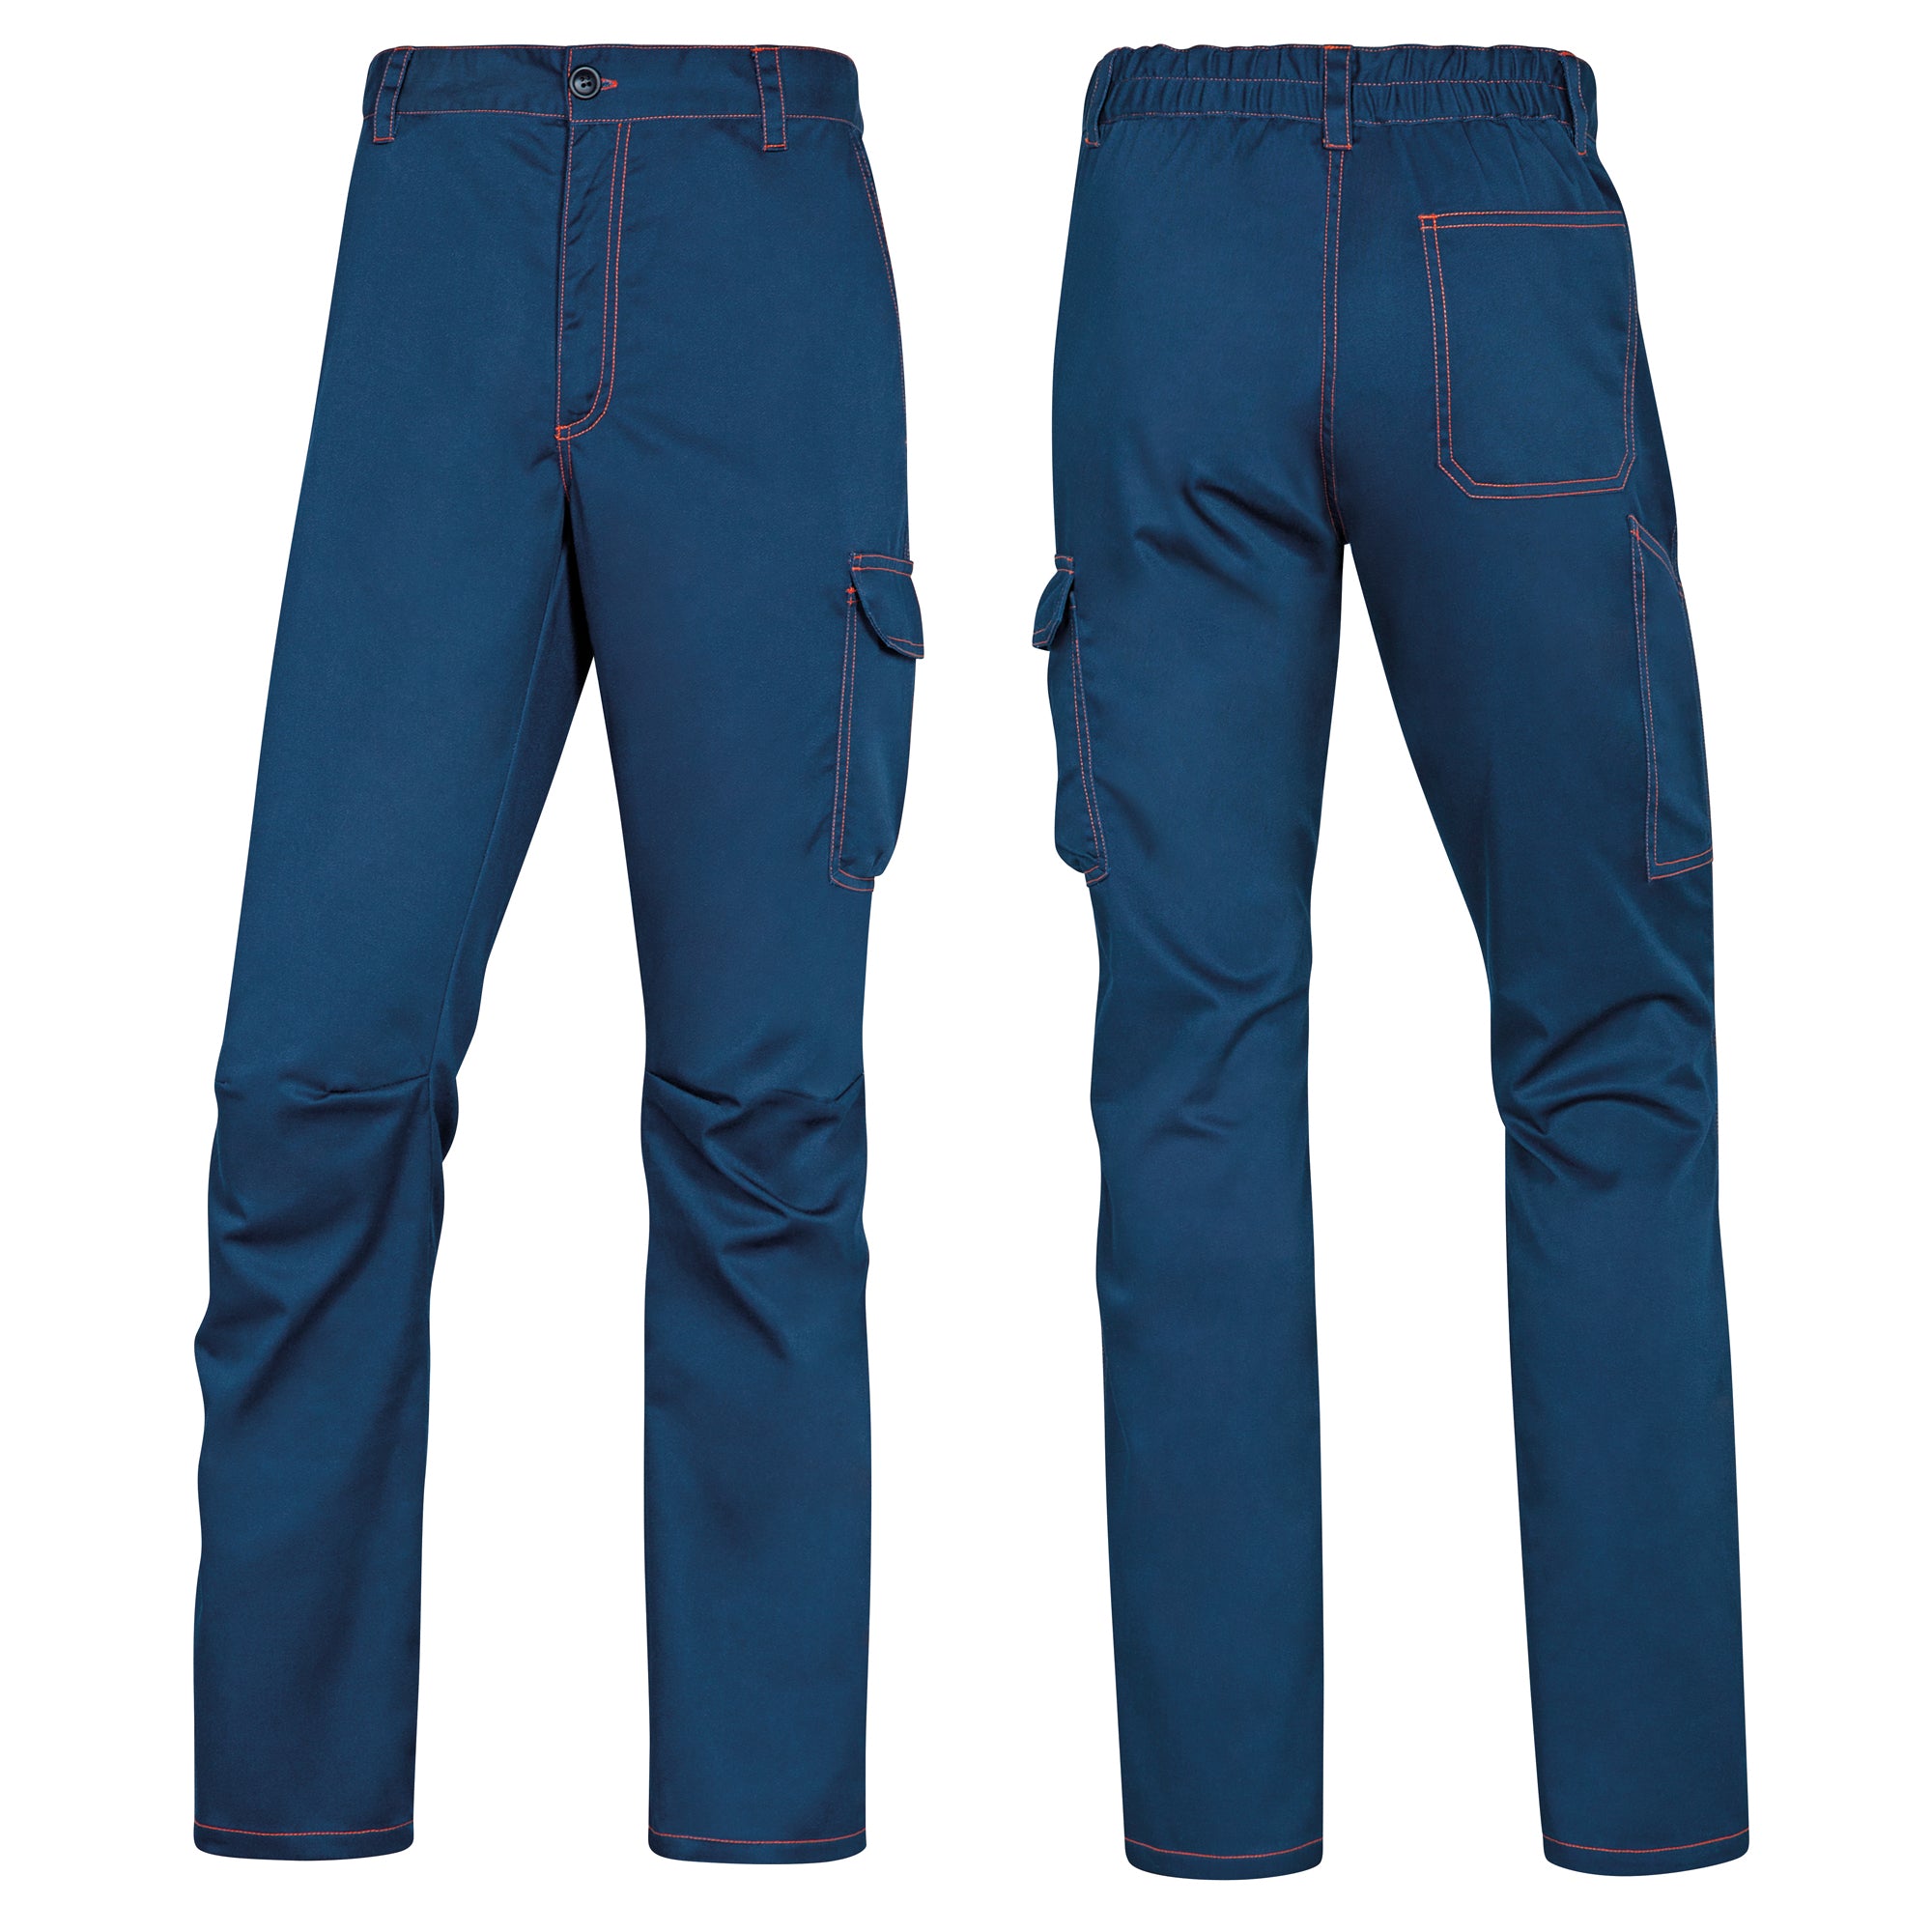 deltaplus-pantalone-lavoro-panostrpa-tg-m-blu-arancio